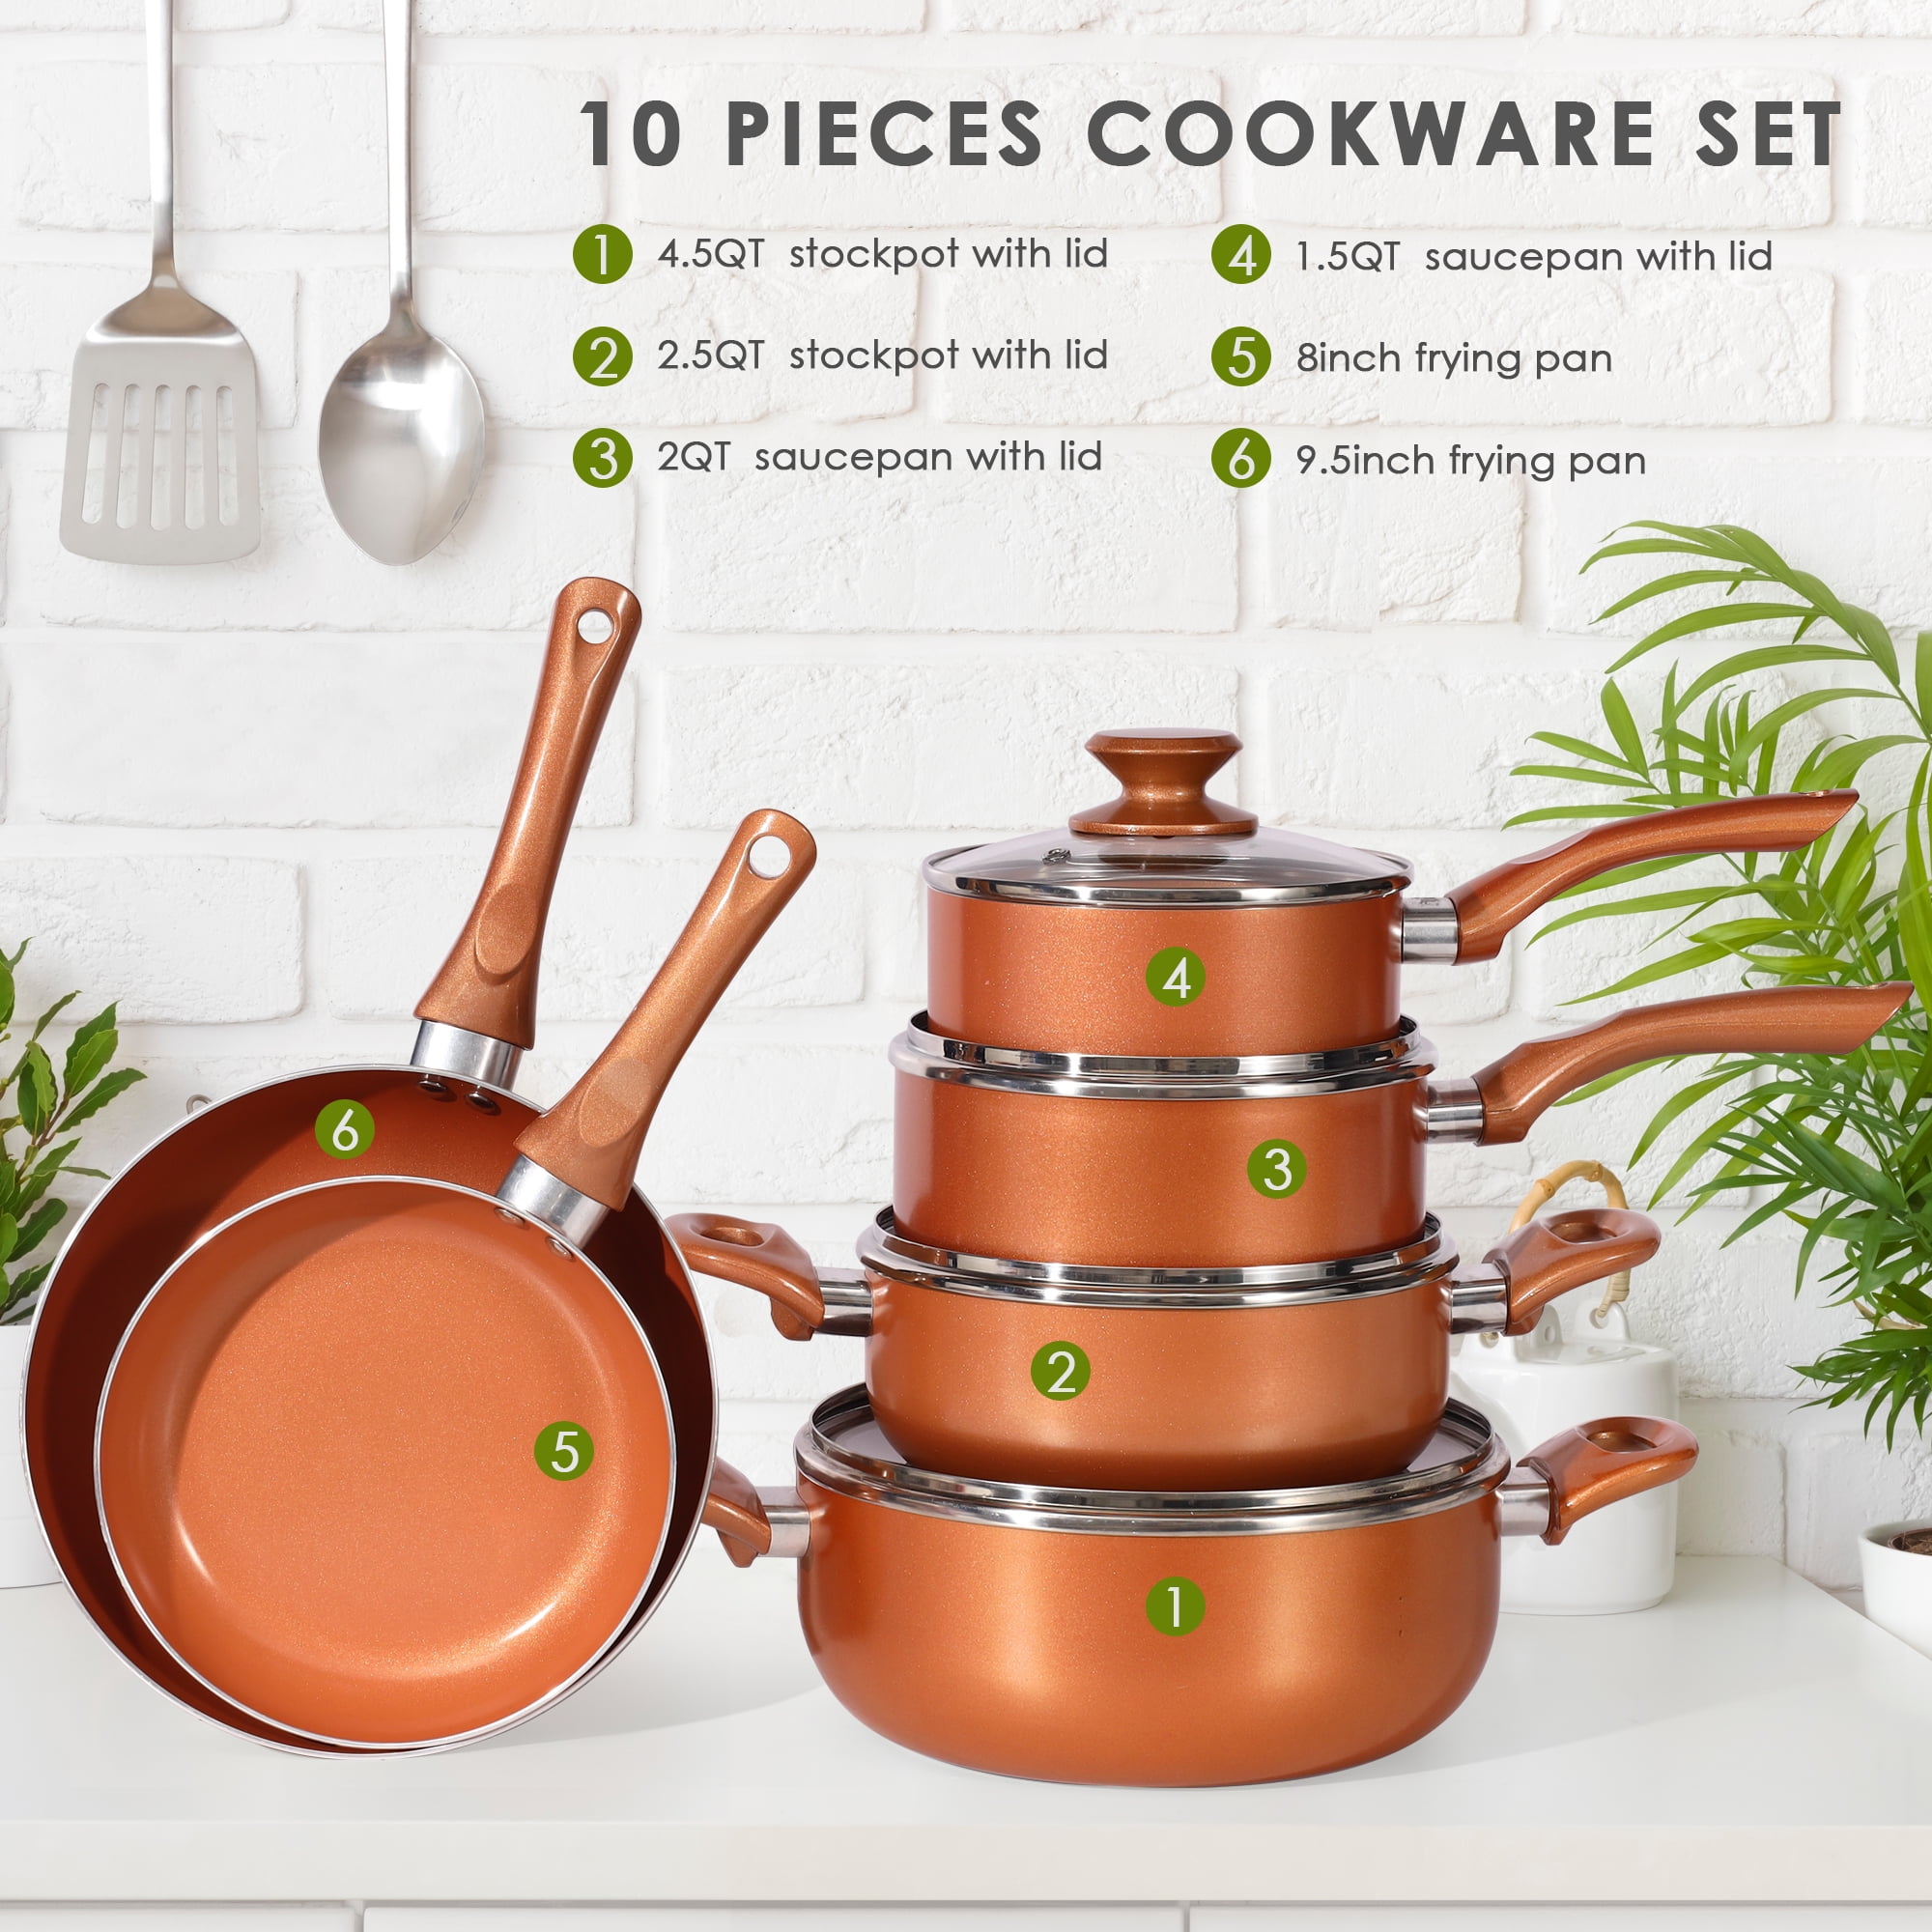 CulinaryGourmet 10-pc. Aluminum Cookware Set w/ Ceramic Nonstick 